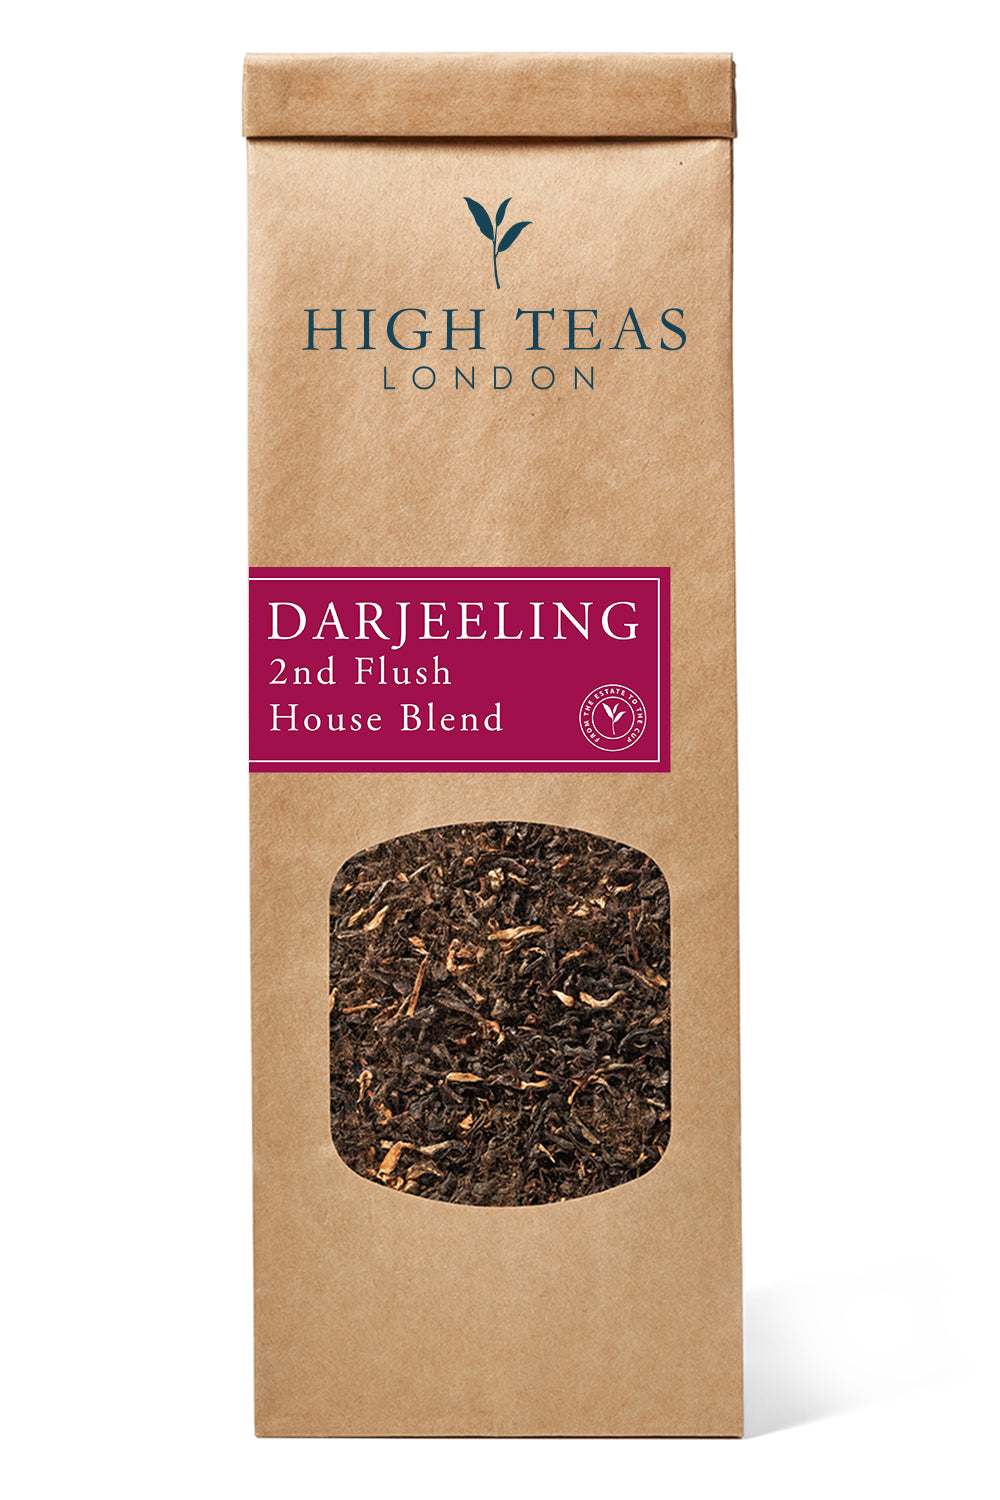 Darjeeling Premium 2nd Flush House Blend-50g-Loose Leaf Tea-High Teas